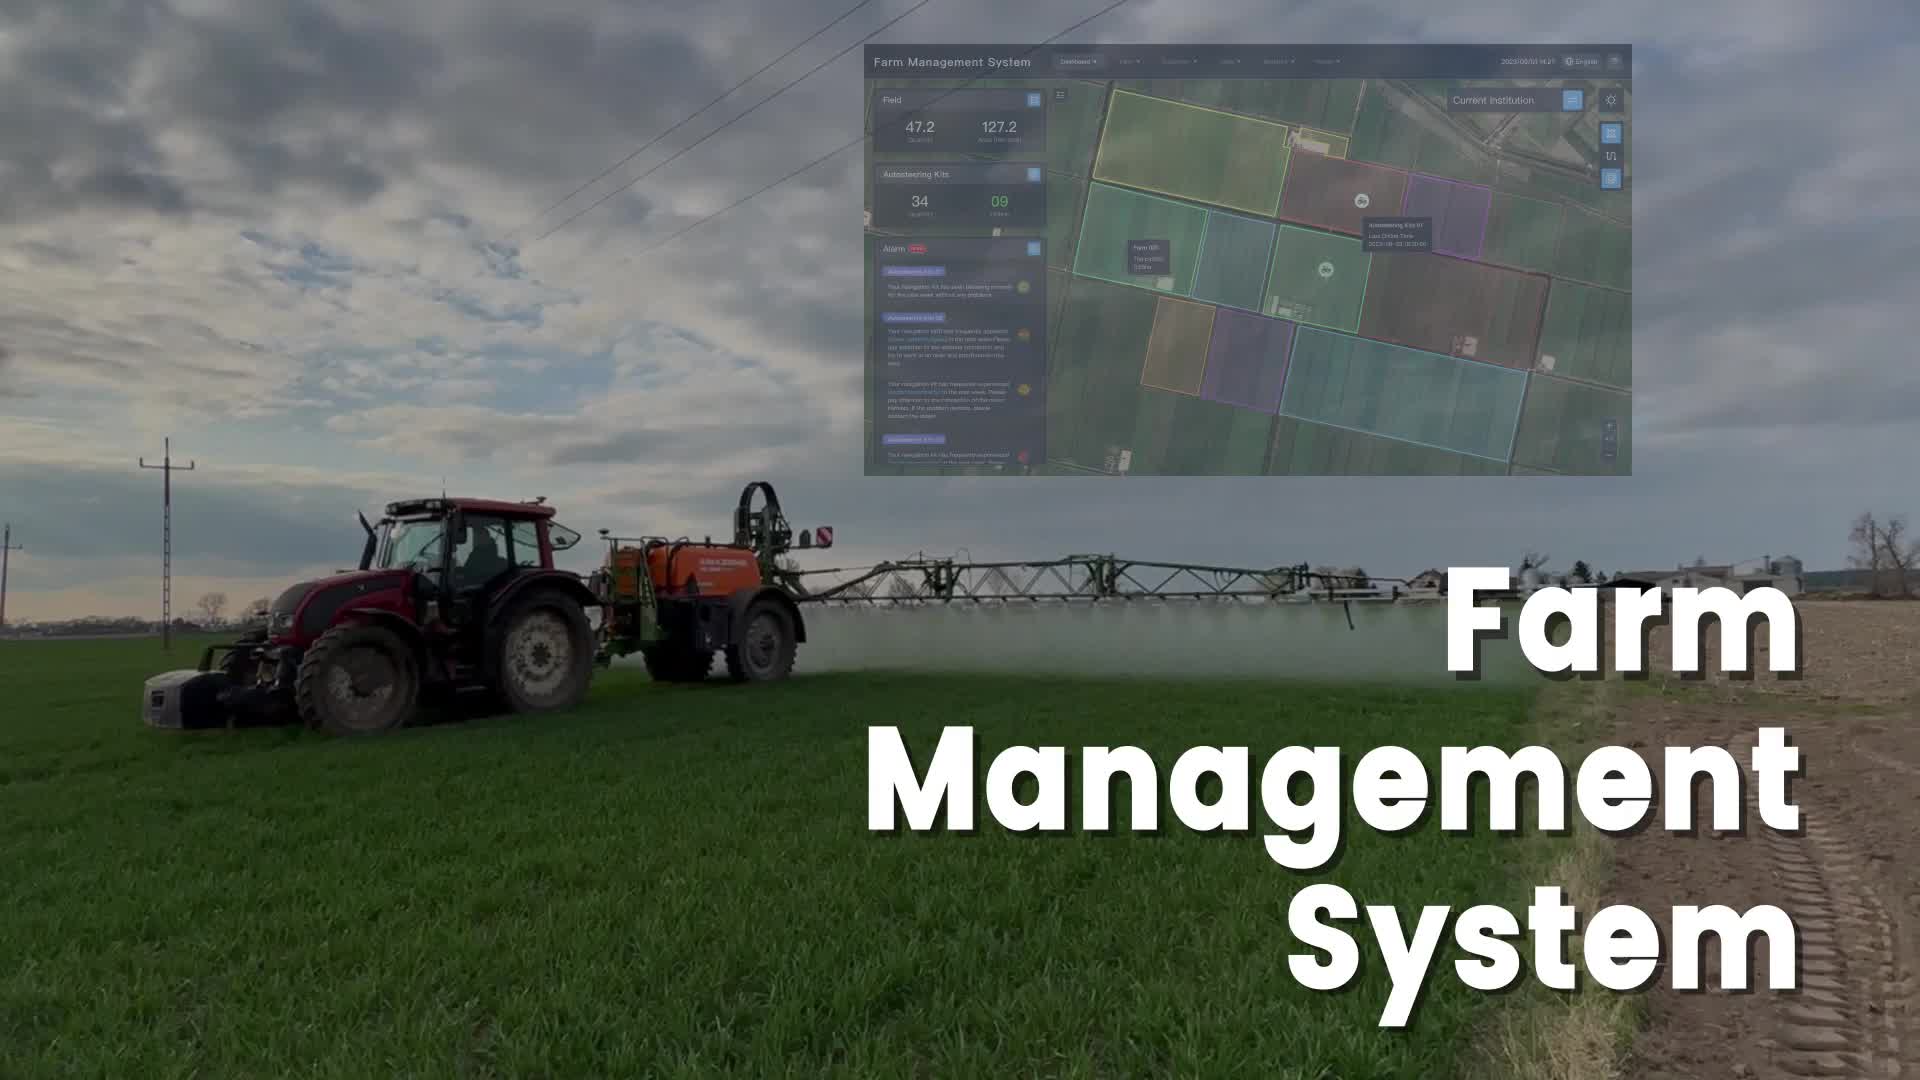 FJD Farm Management System